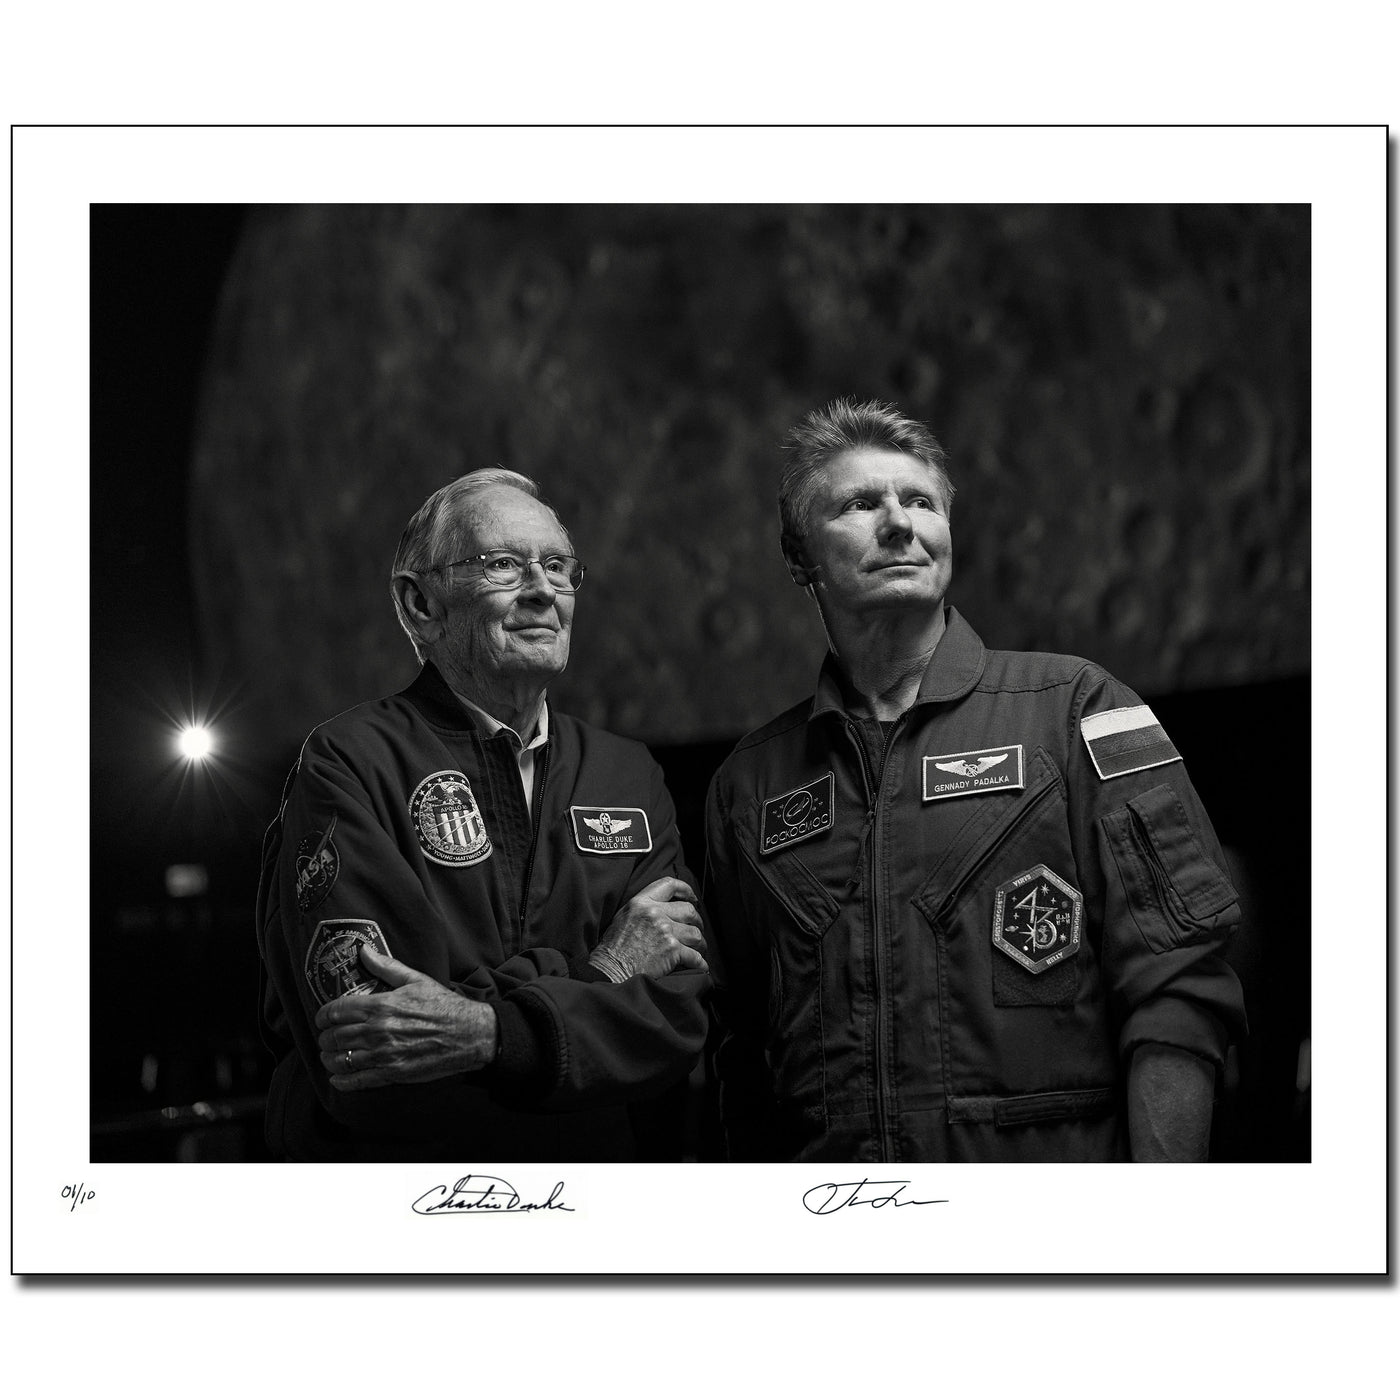 Charlie Duke and Gennady Padalka - Klaus Mellenthin 21'' x 17'' Baryt photograph